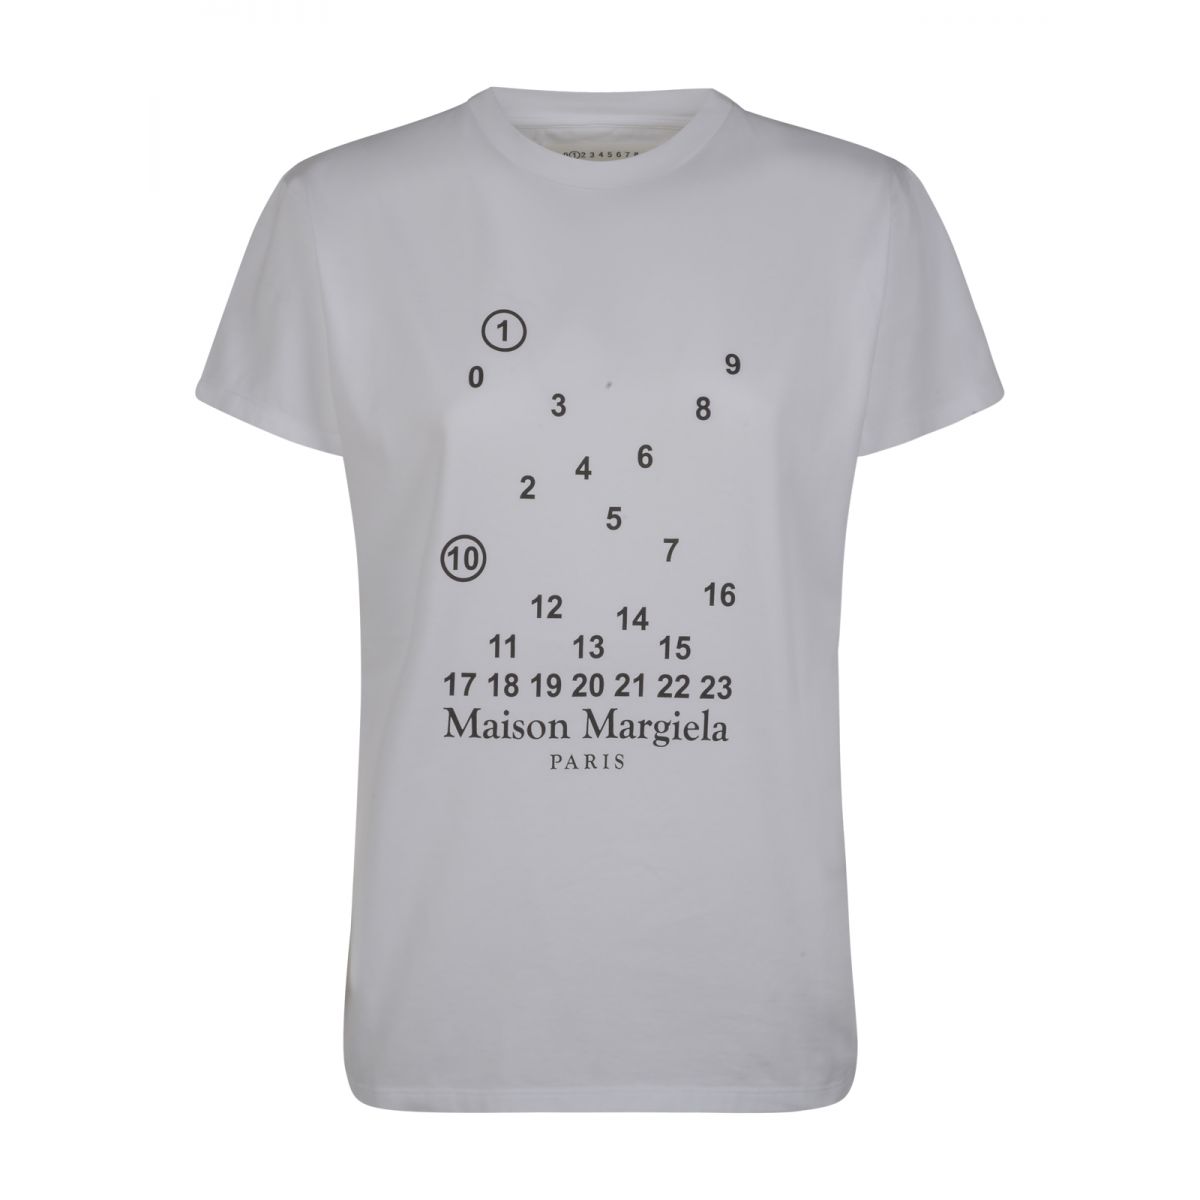 MAISON MARGIELA - Camiseta con estampado gráfico